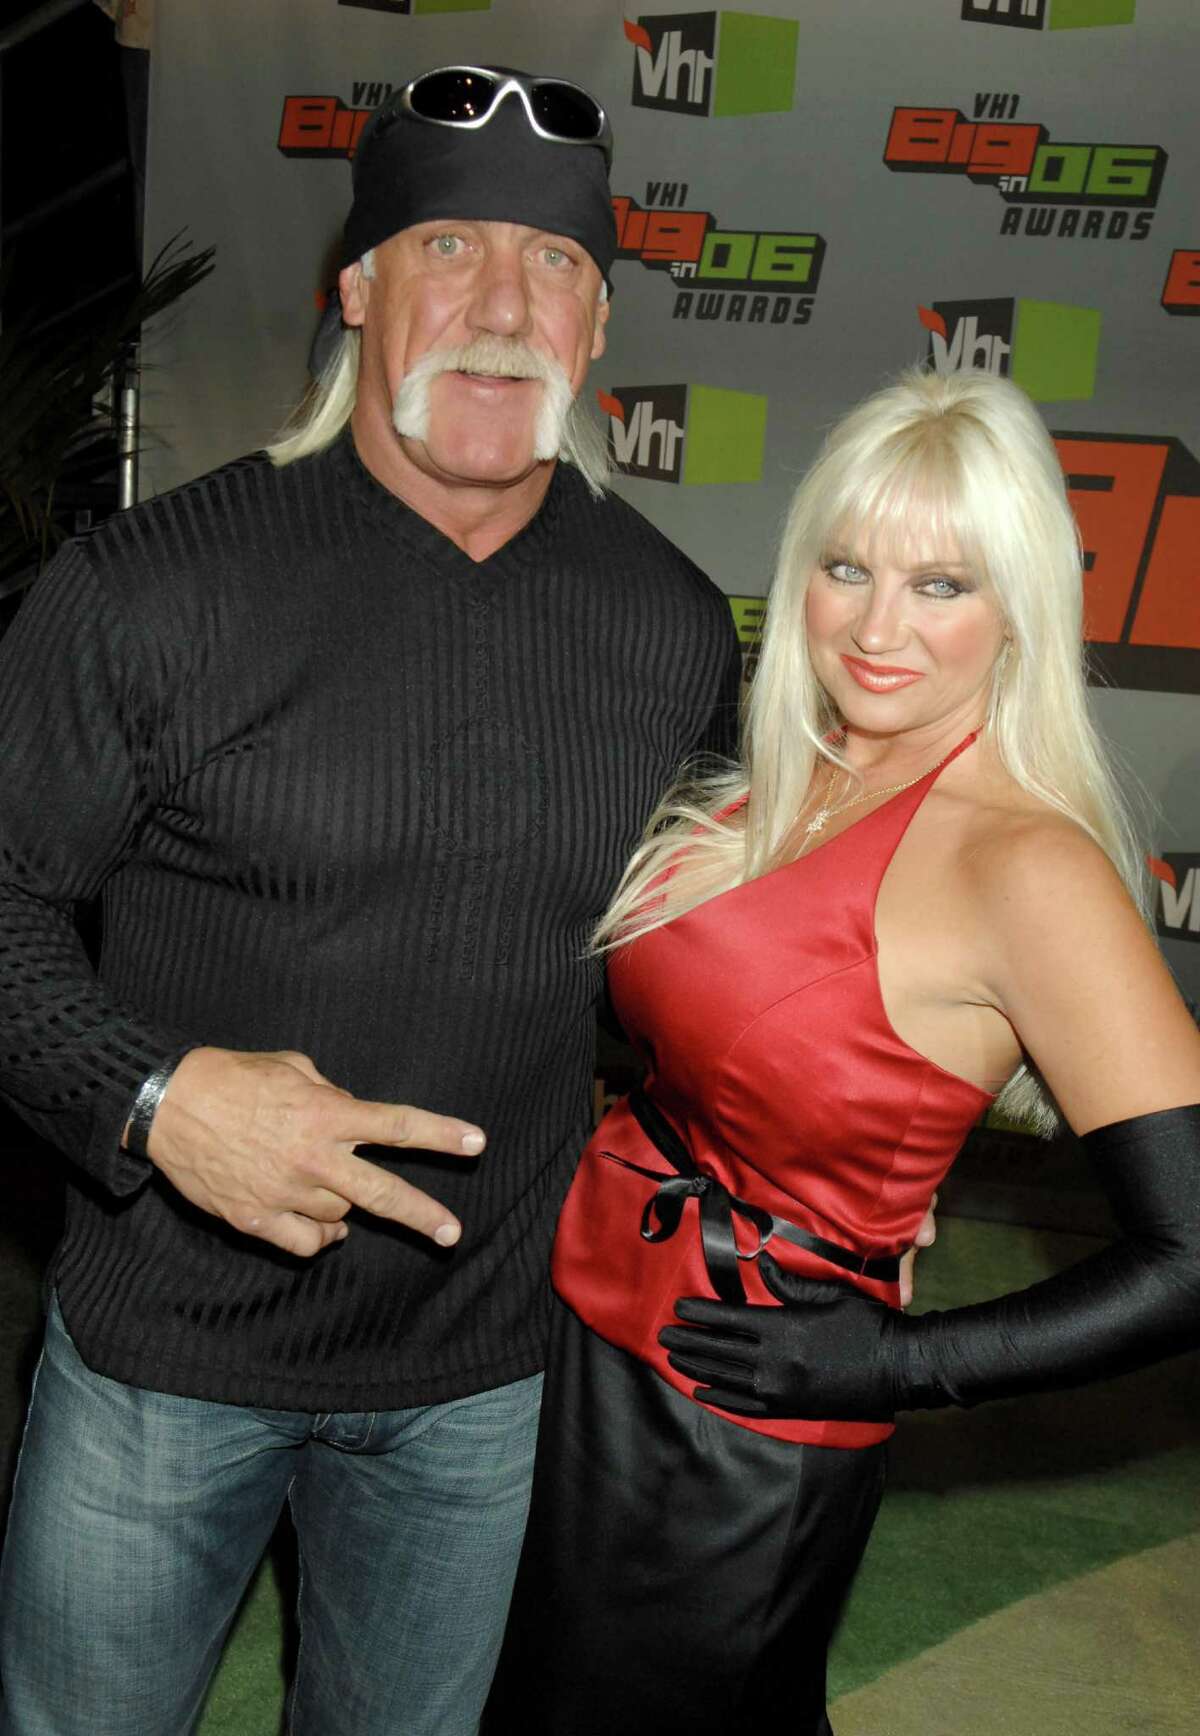 Hulk Hogan talks cancer awareness at AT&T Center